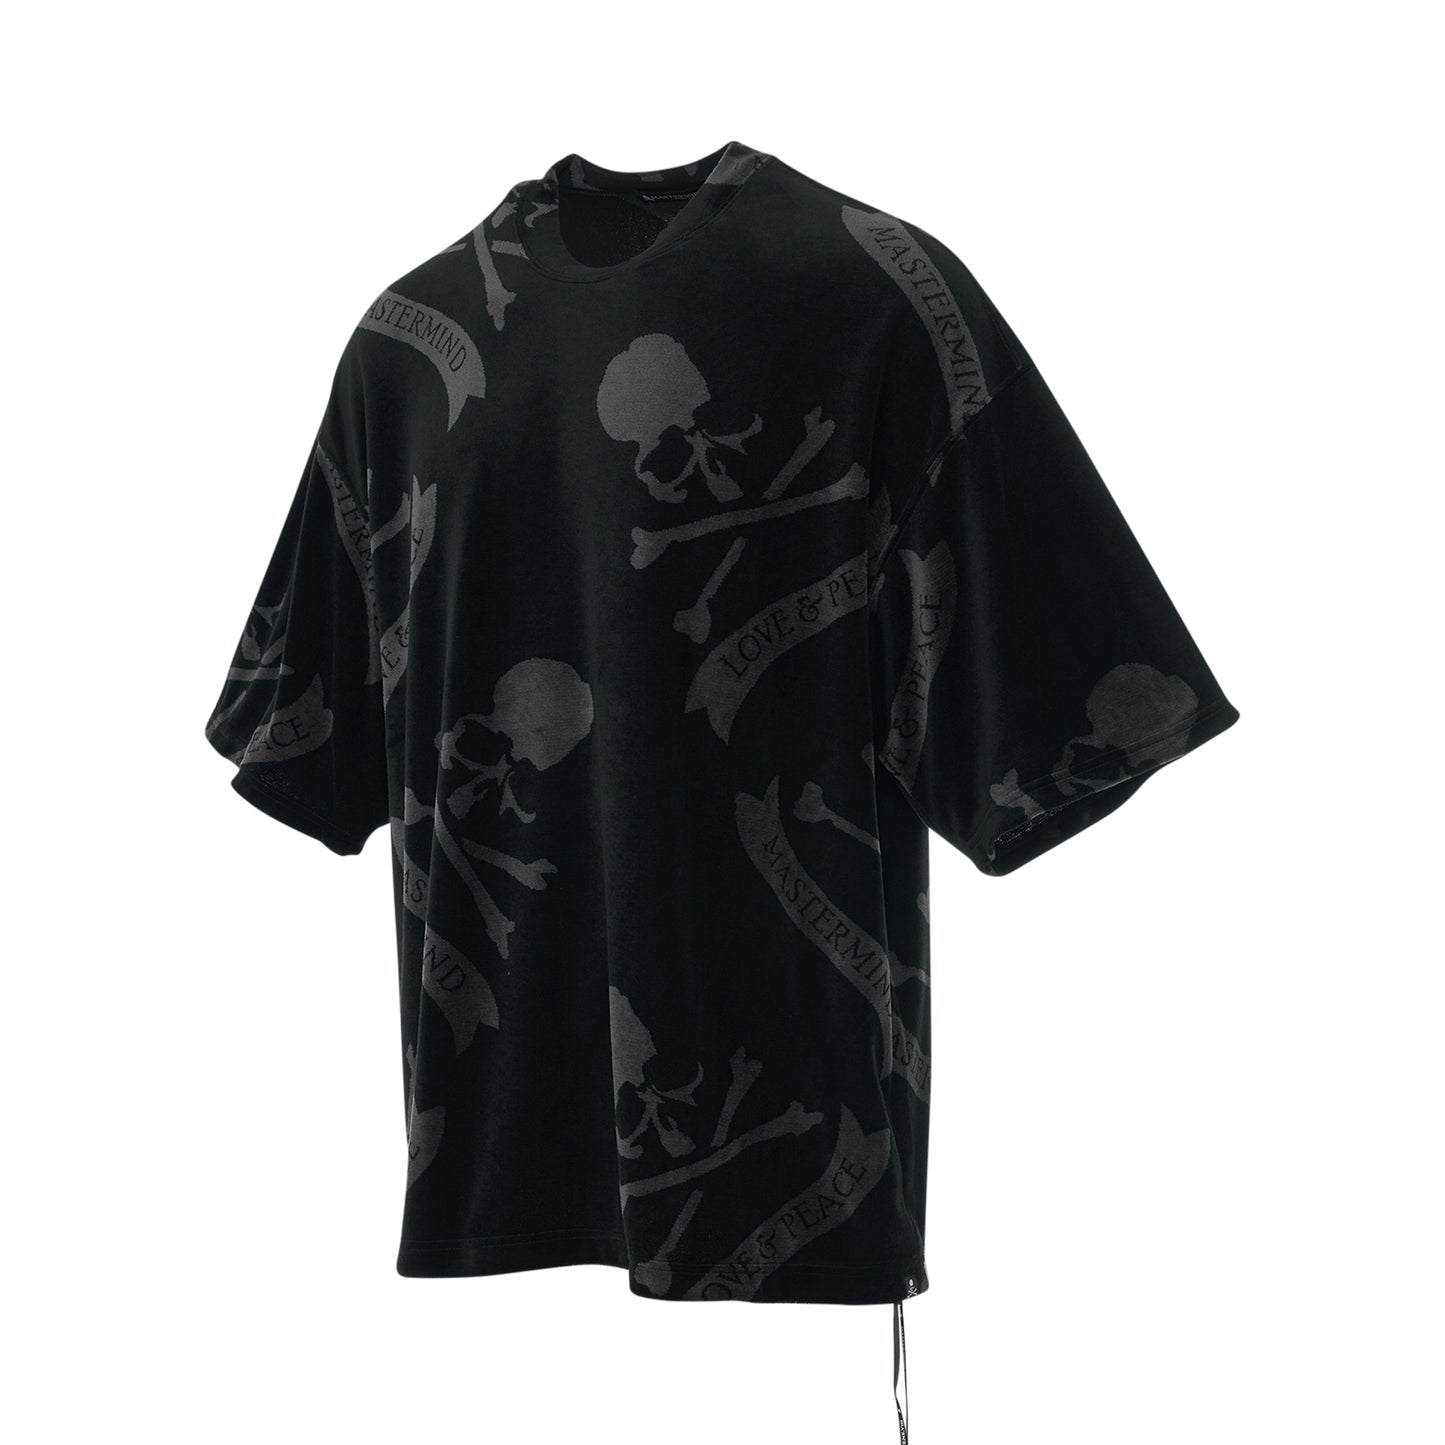 All-Over Skull Velour Boxy Fit T-Shirt in Black